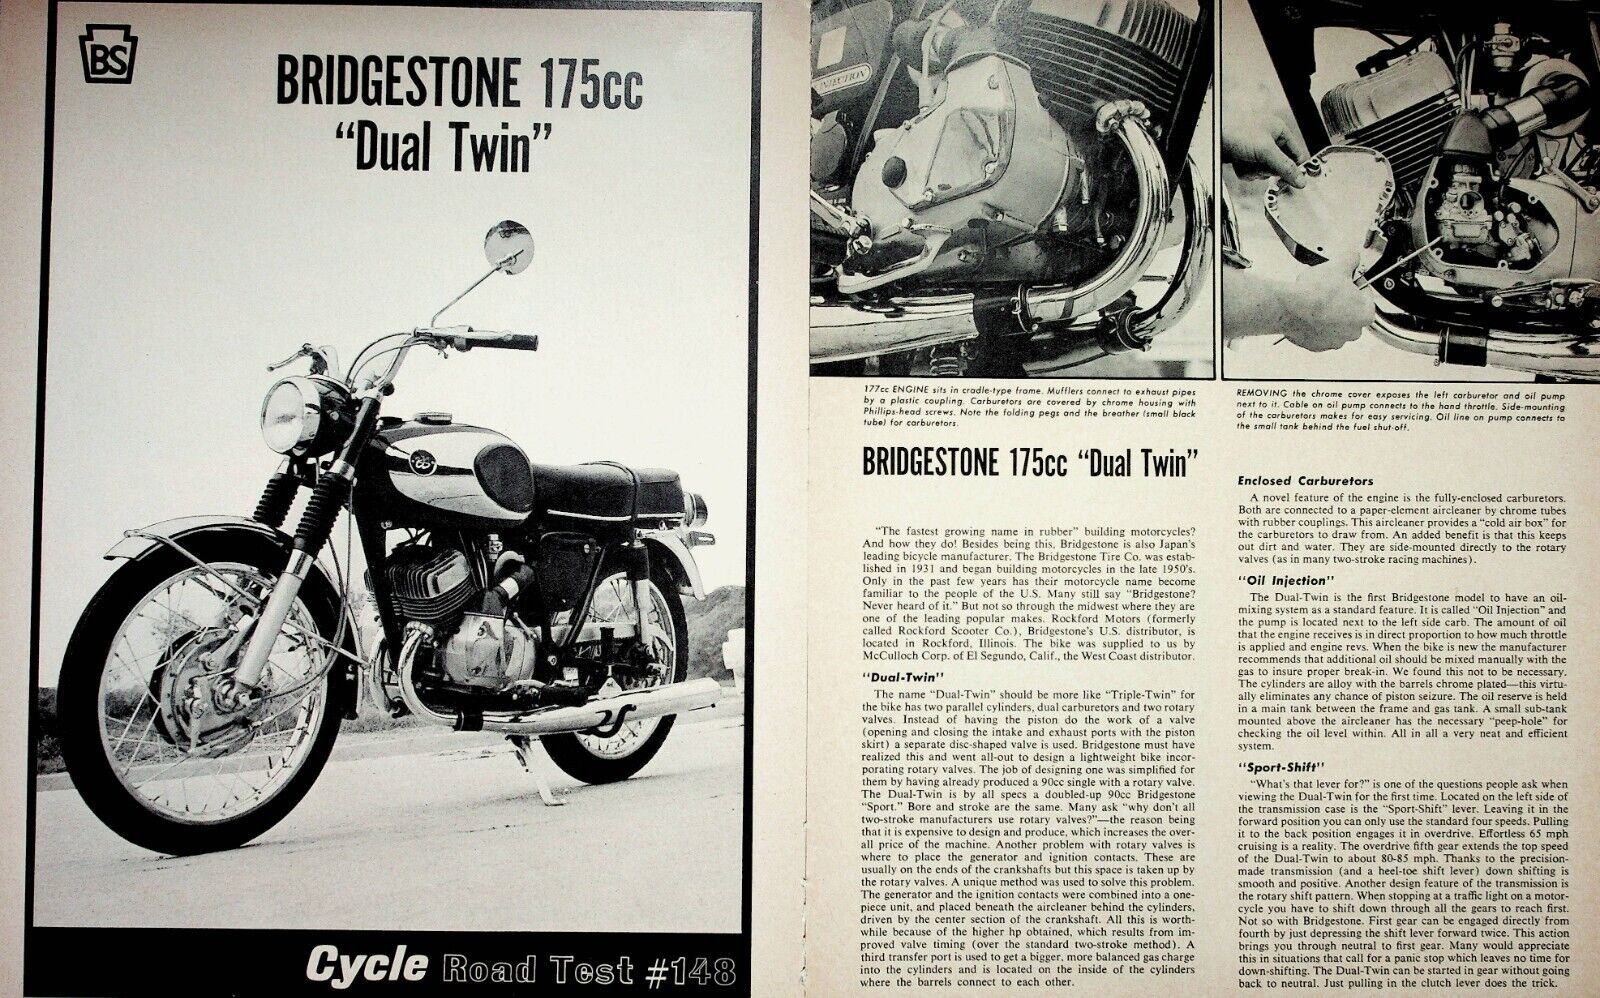 1966 Bridgestone 175 Dual Twin Motorcycle Road Test - 3-Page Vintage Article